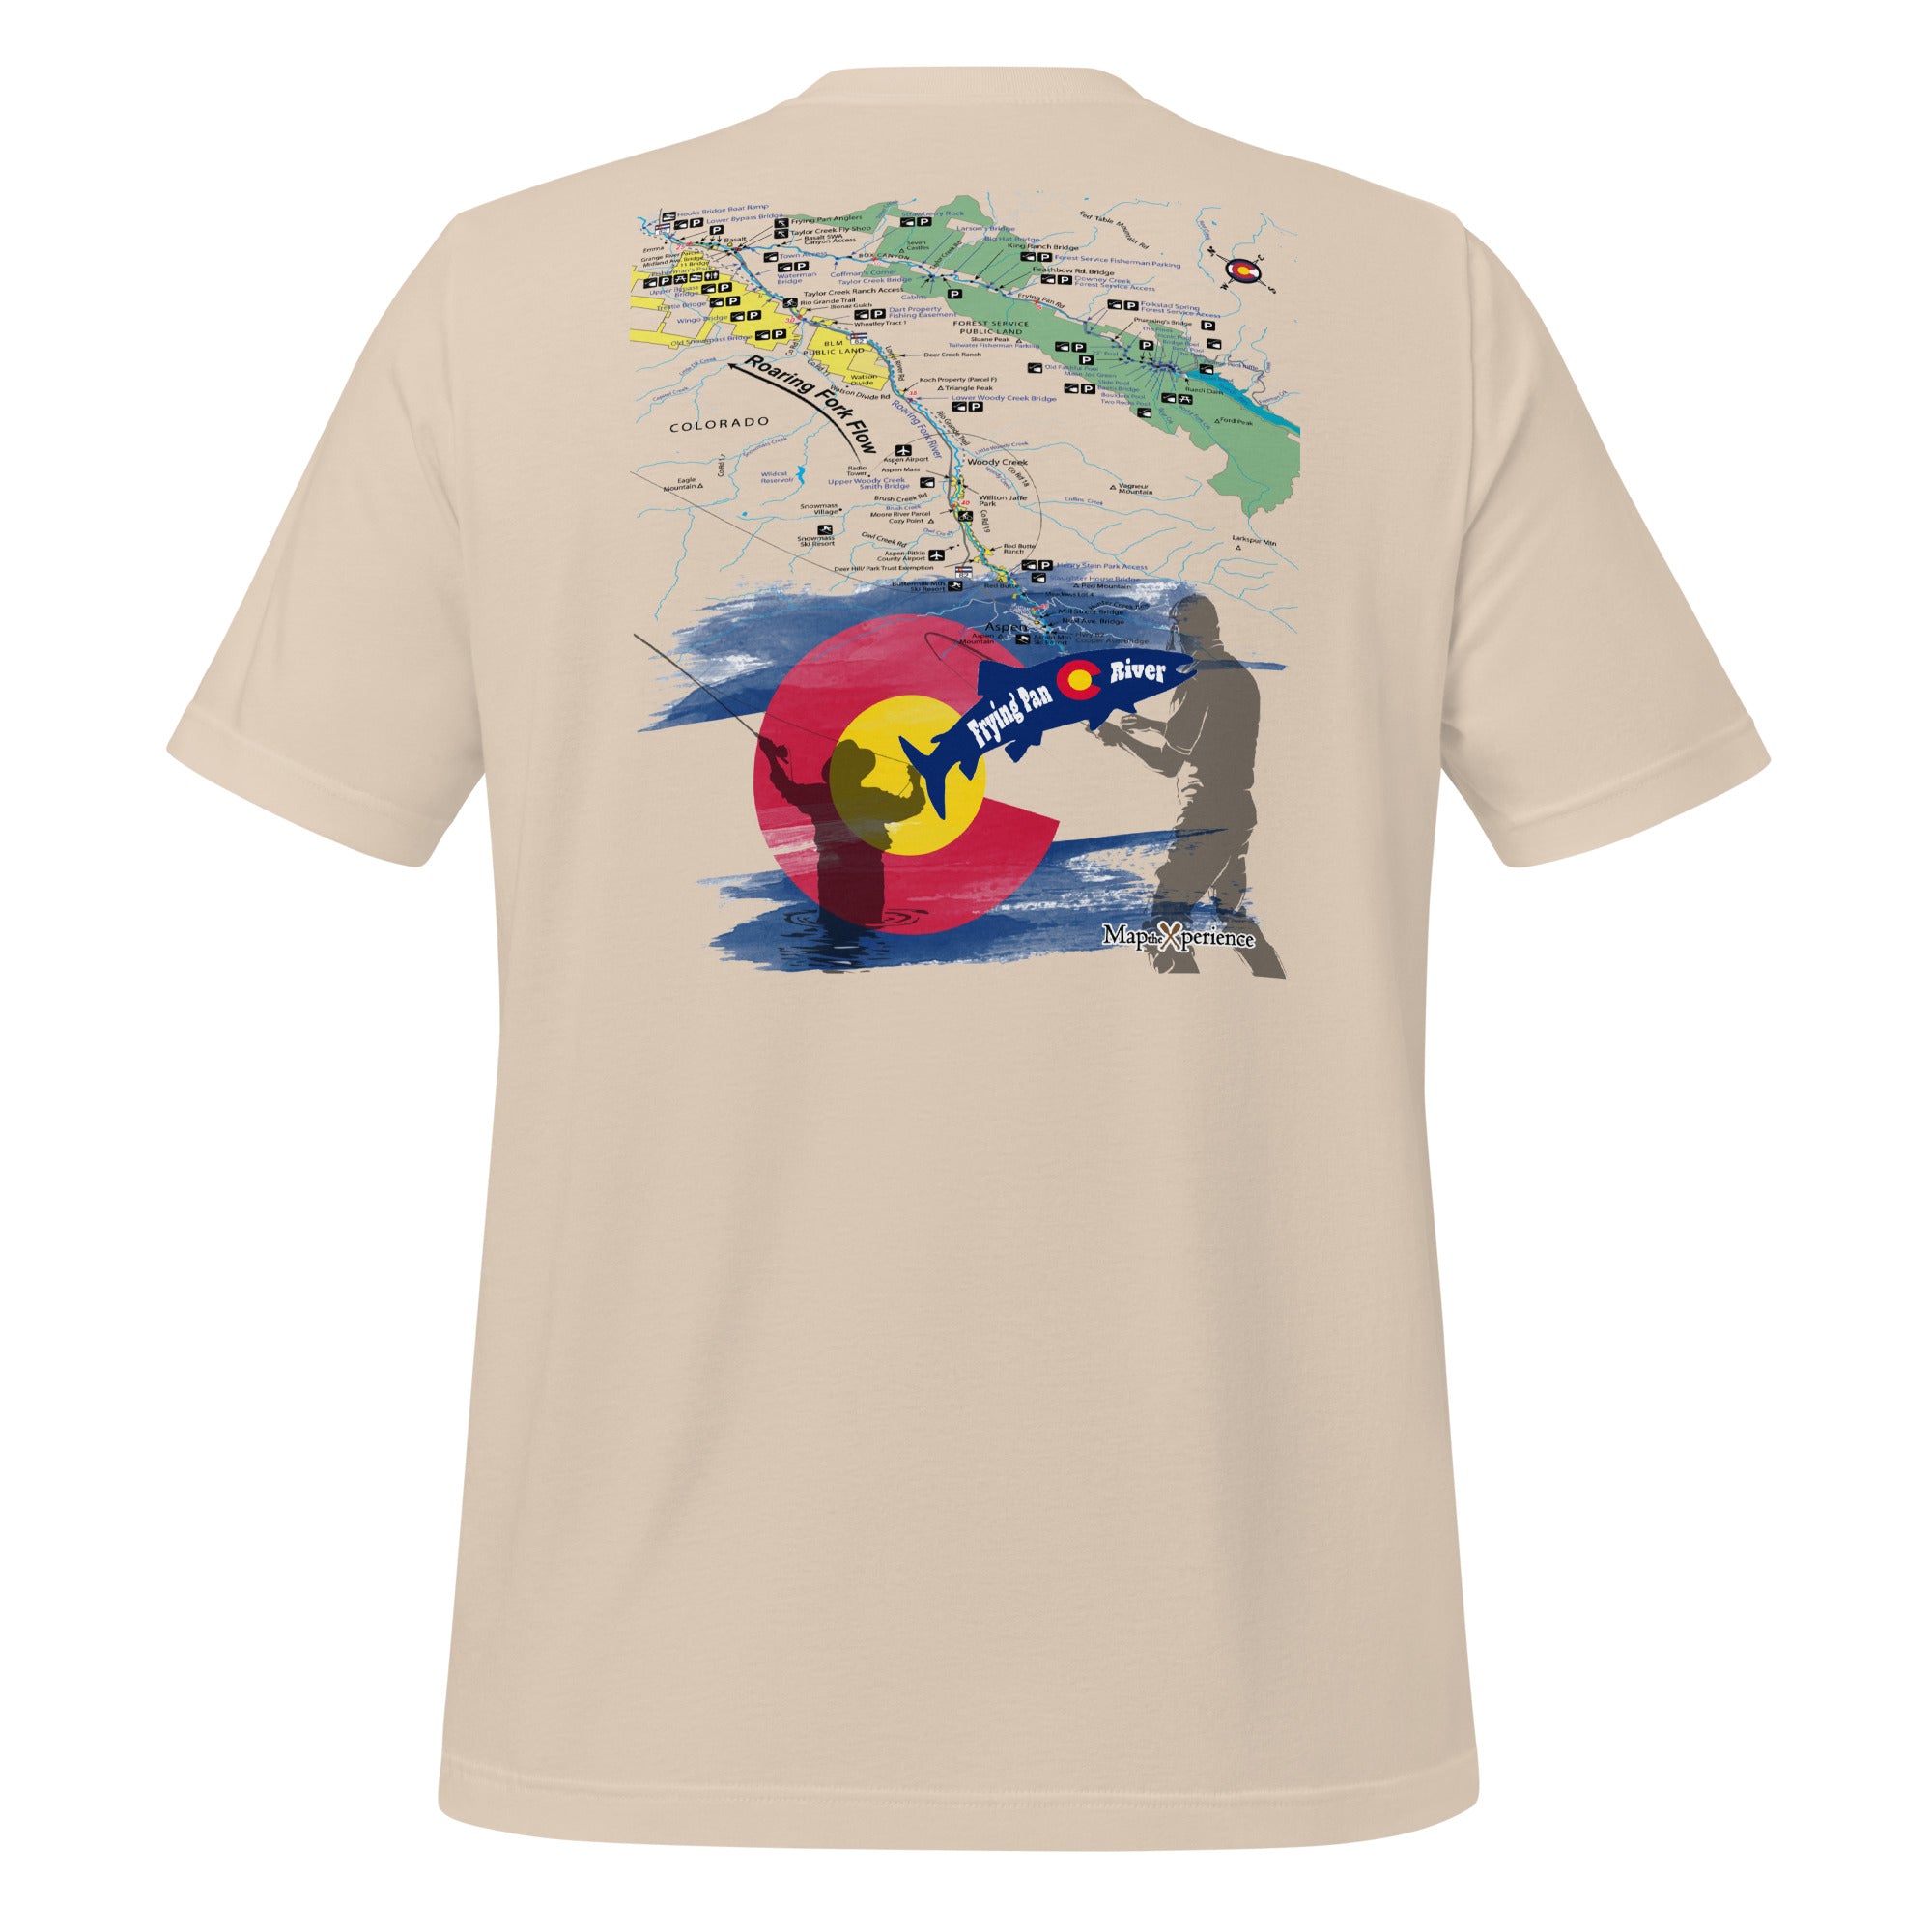 Frying Pan River, Colorado Performance t-shirt